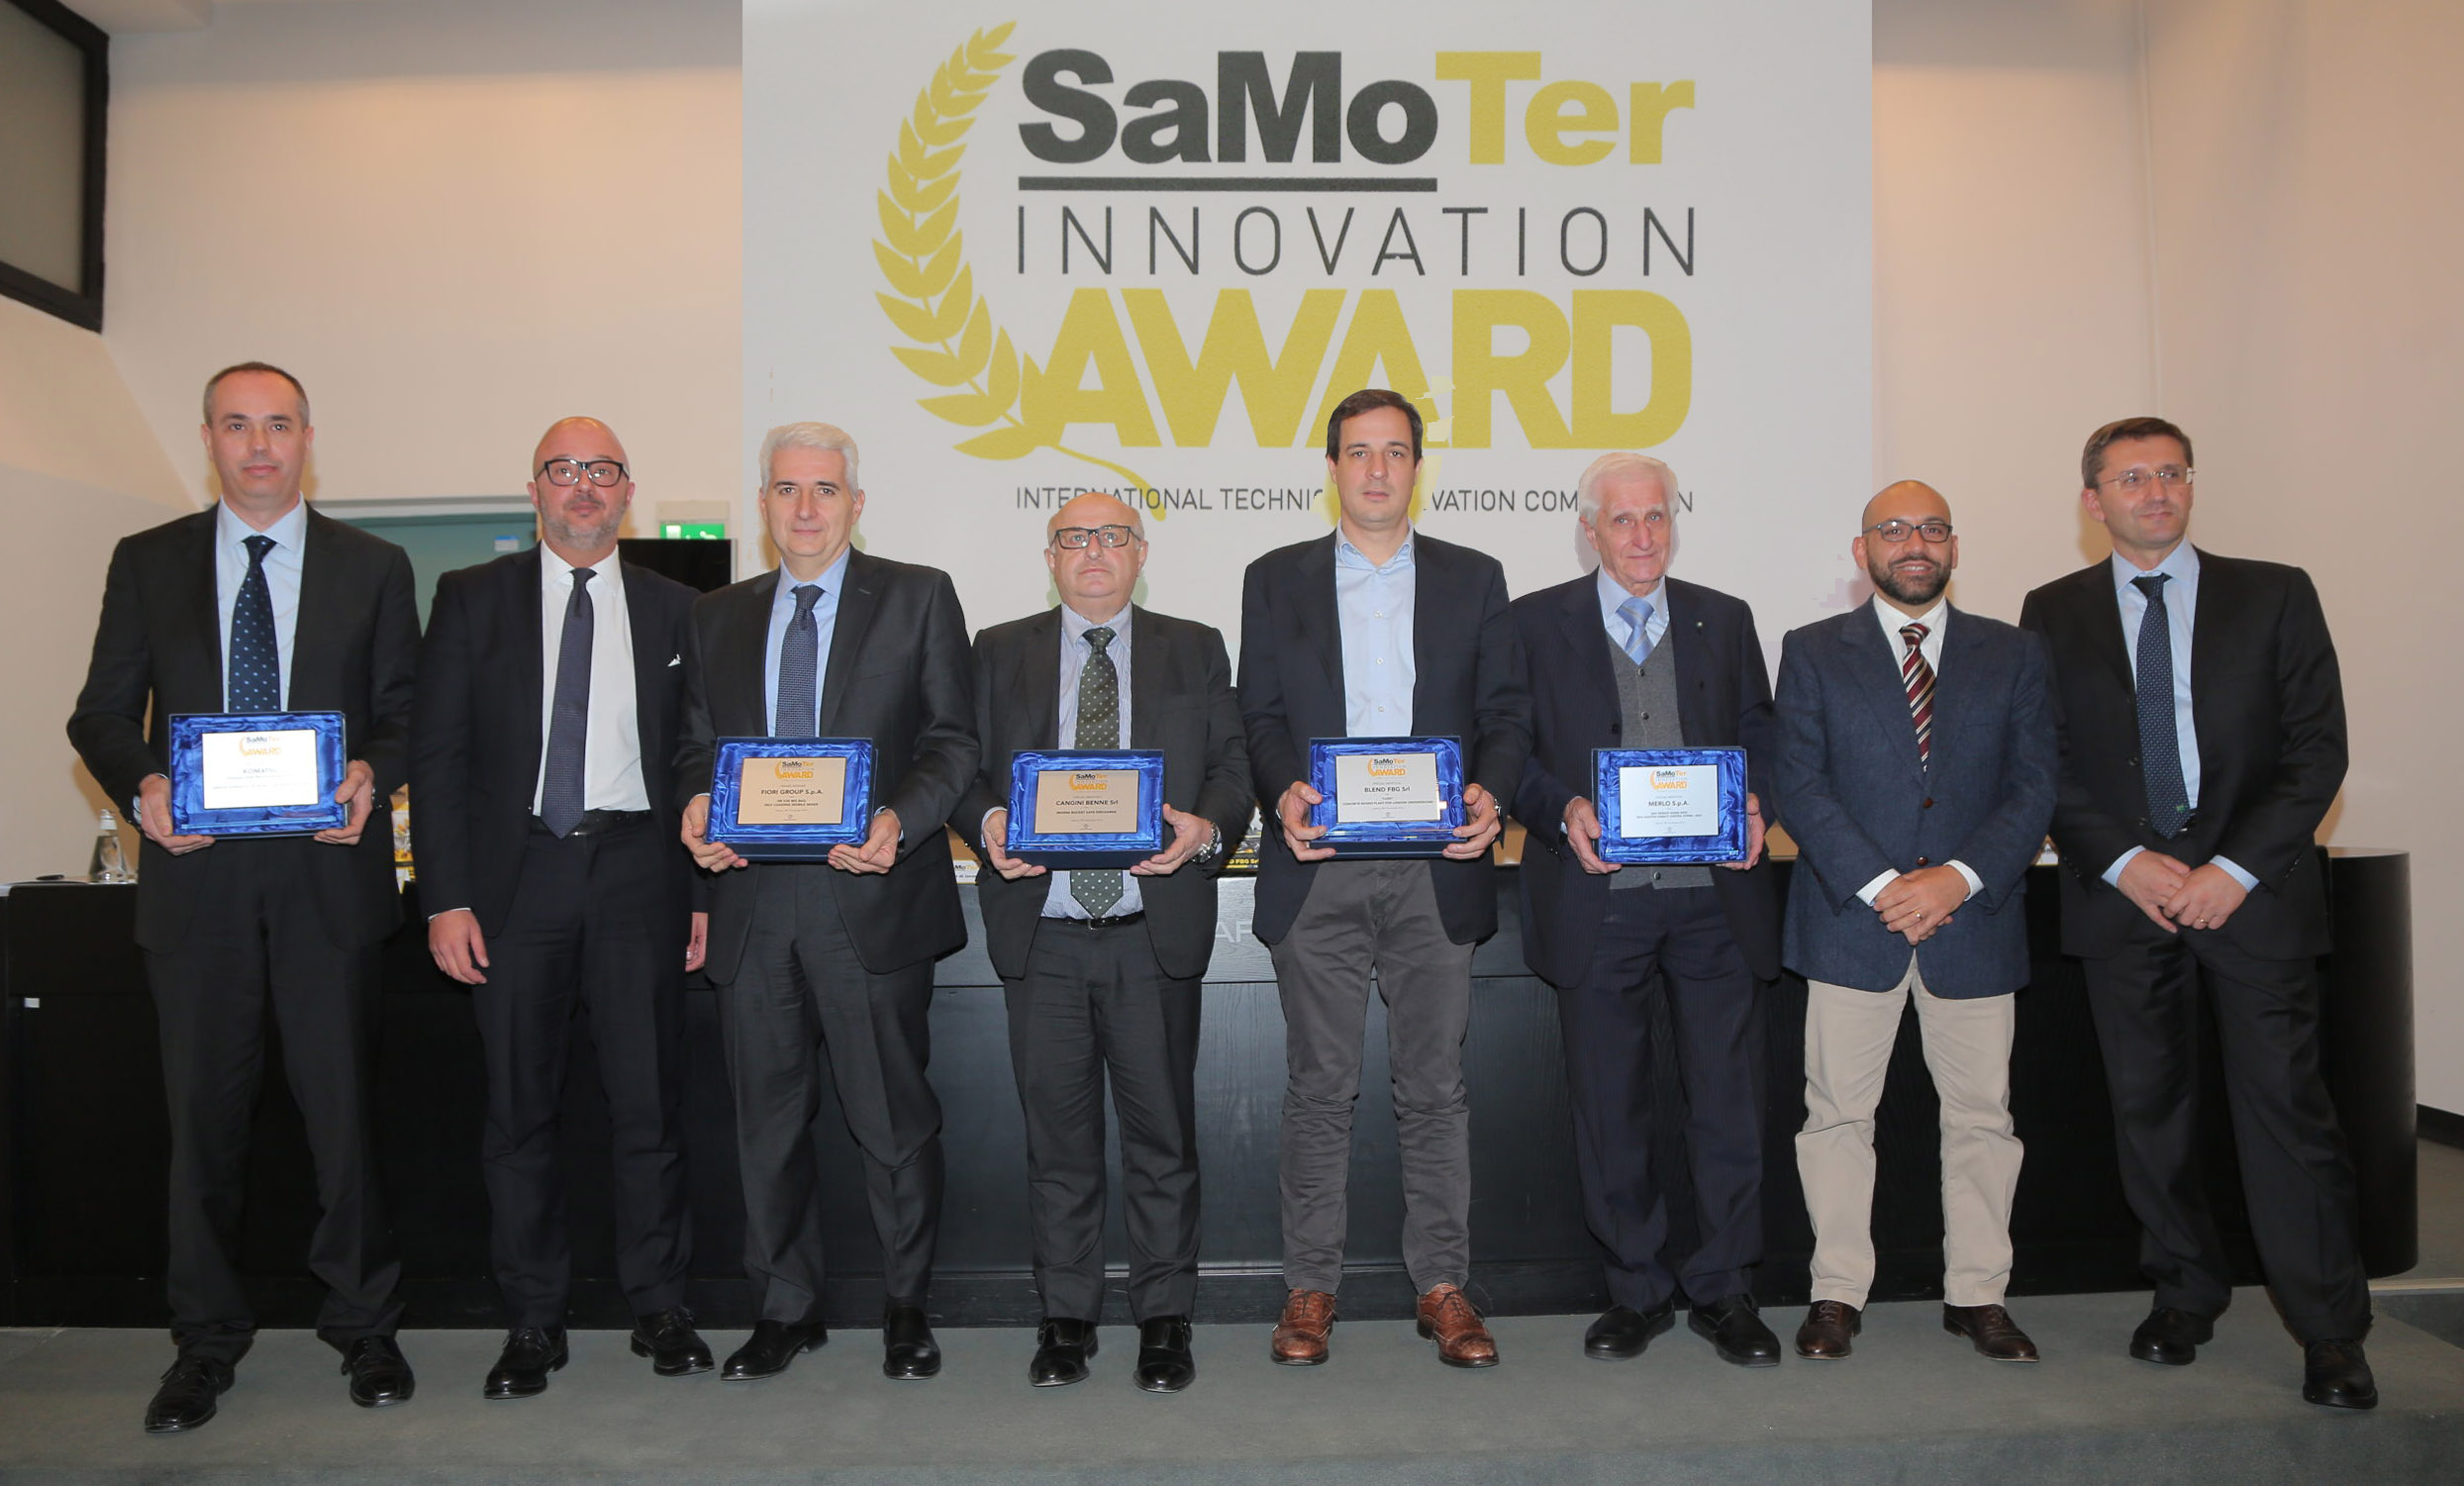 SaMoTer Innovation Award - The winning companies